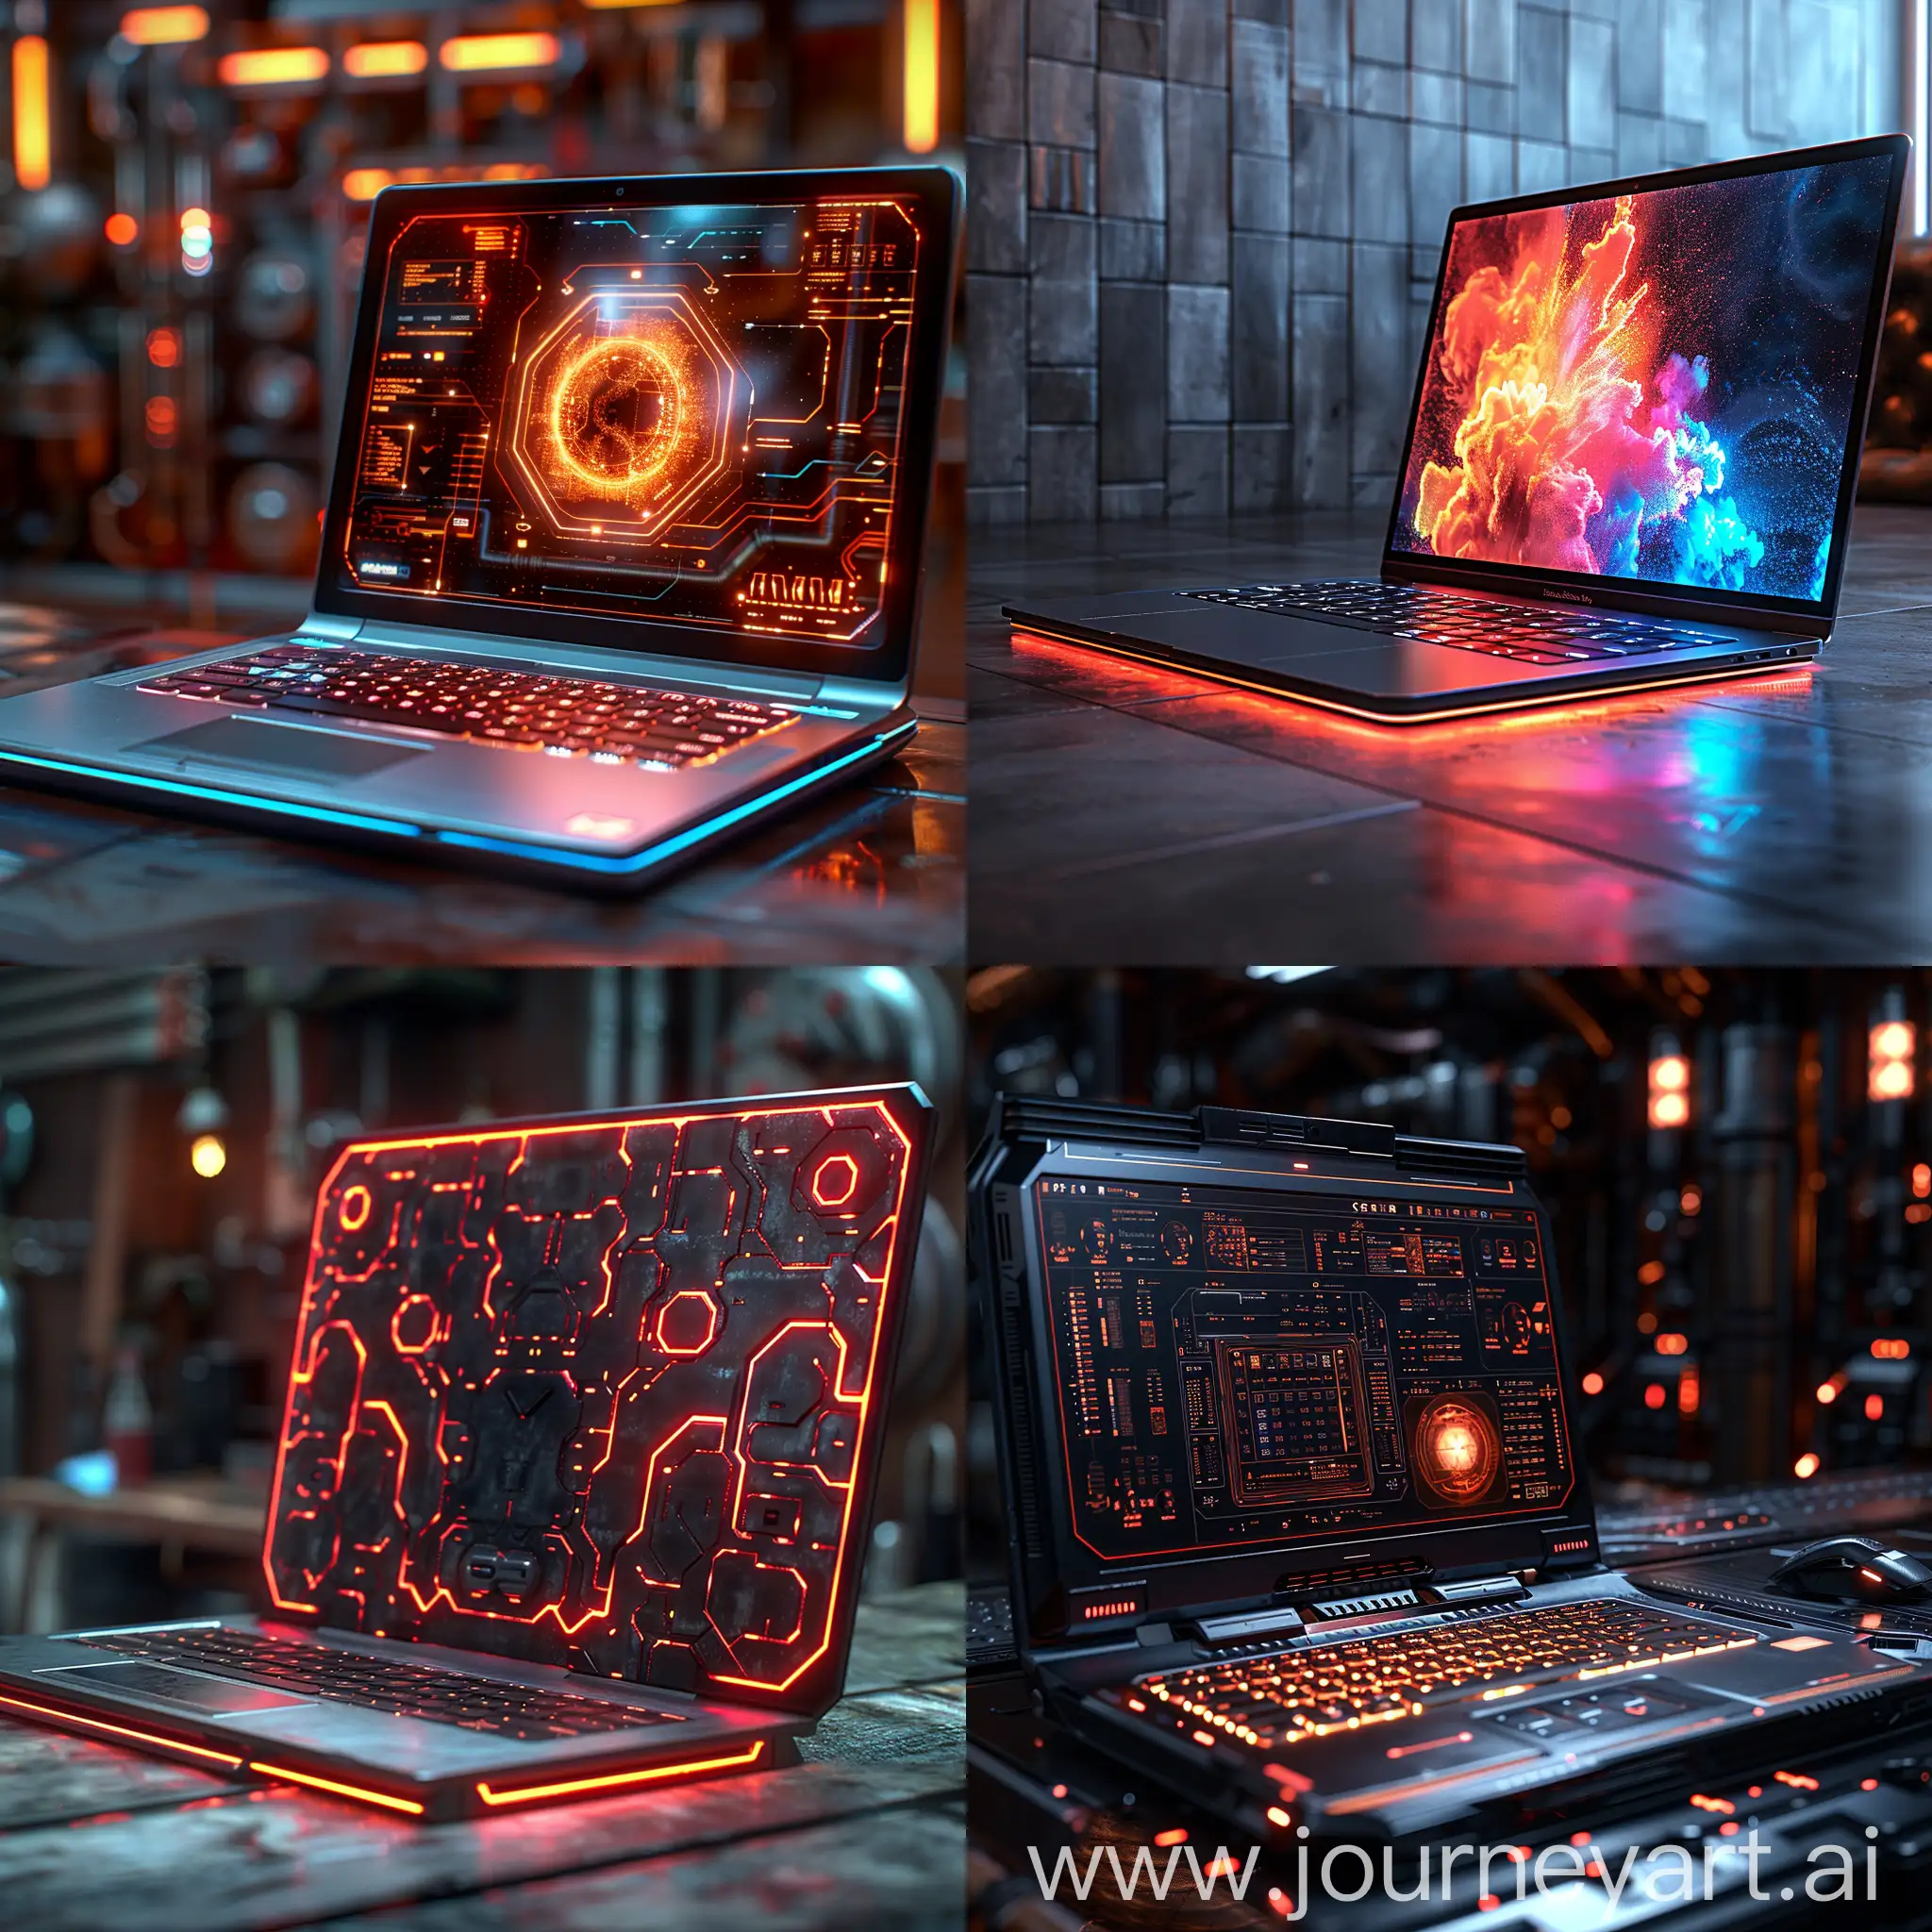 Futuristic-Utopian-Laptop-Concept-with-Blade-Runner-Aesthetics